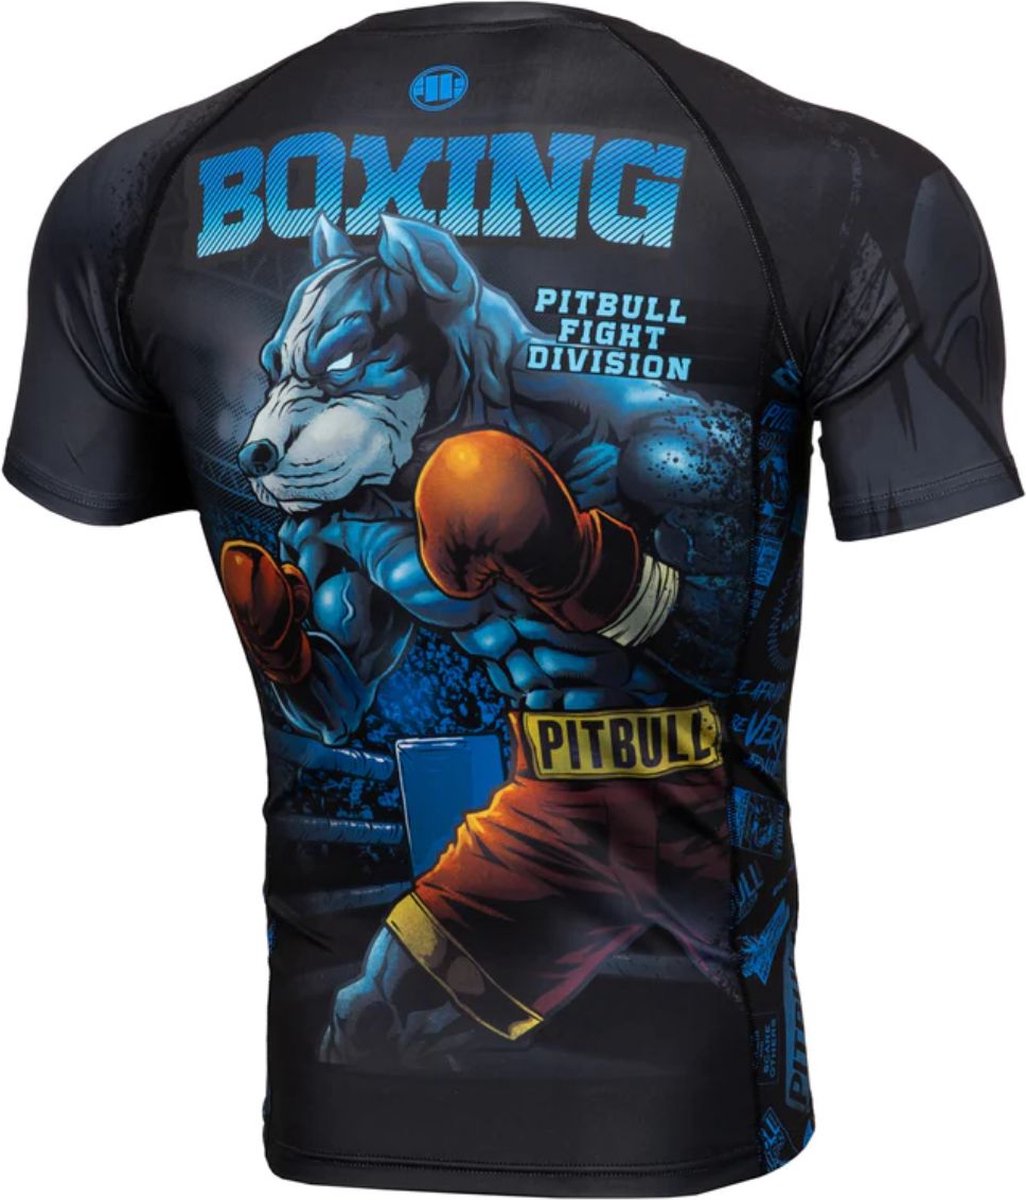 Pit Bull - Master of Boxing - Rashguard Short Sleeve - Vechtsport rashgaurd met korte mouwen - Compressie shirt - Zwart/ Blauw - Maat M